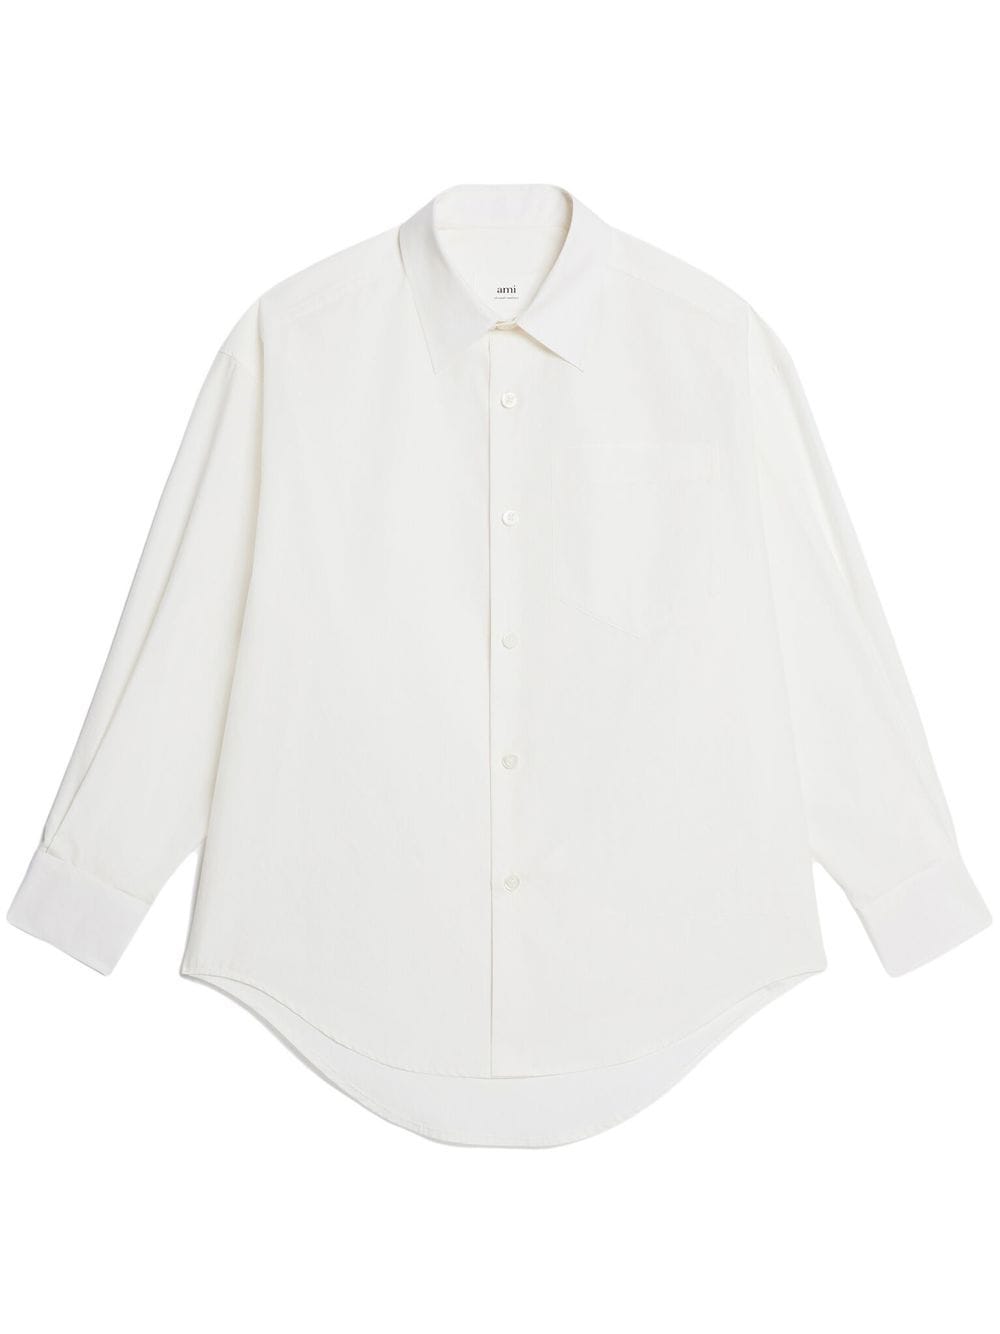 AMI Paris classic button-up shirt - White von AMI Paris